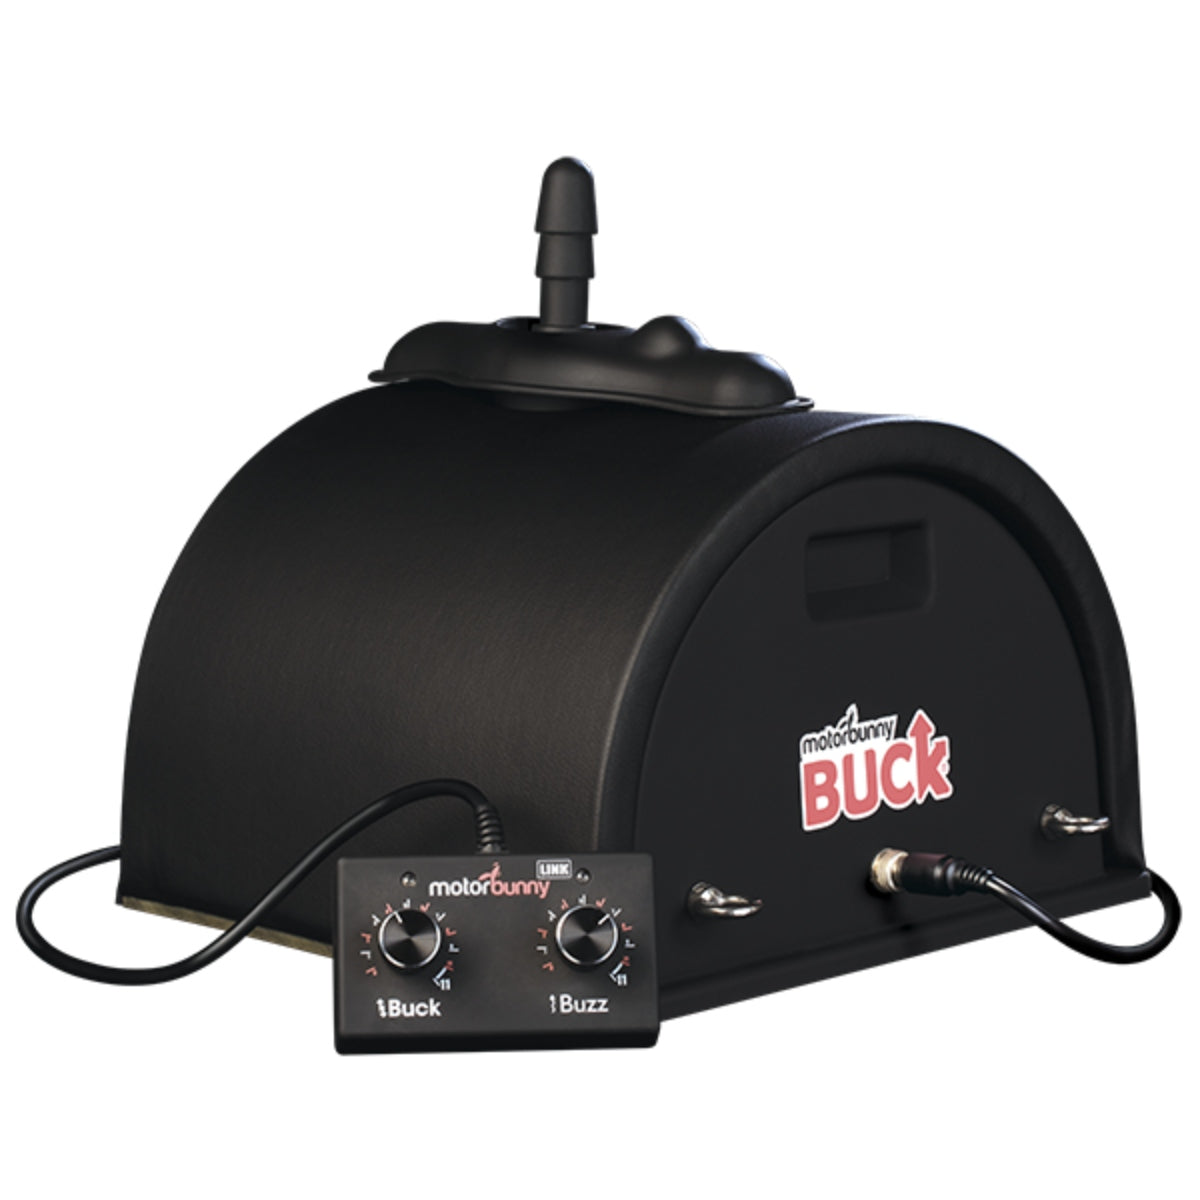 Motorbunny Buck Hybrid Saddle Power Vibrator & Thruster Machine Black